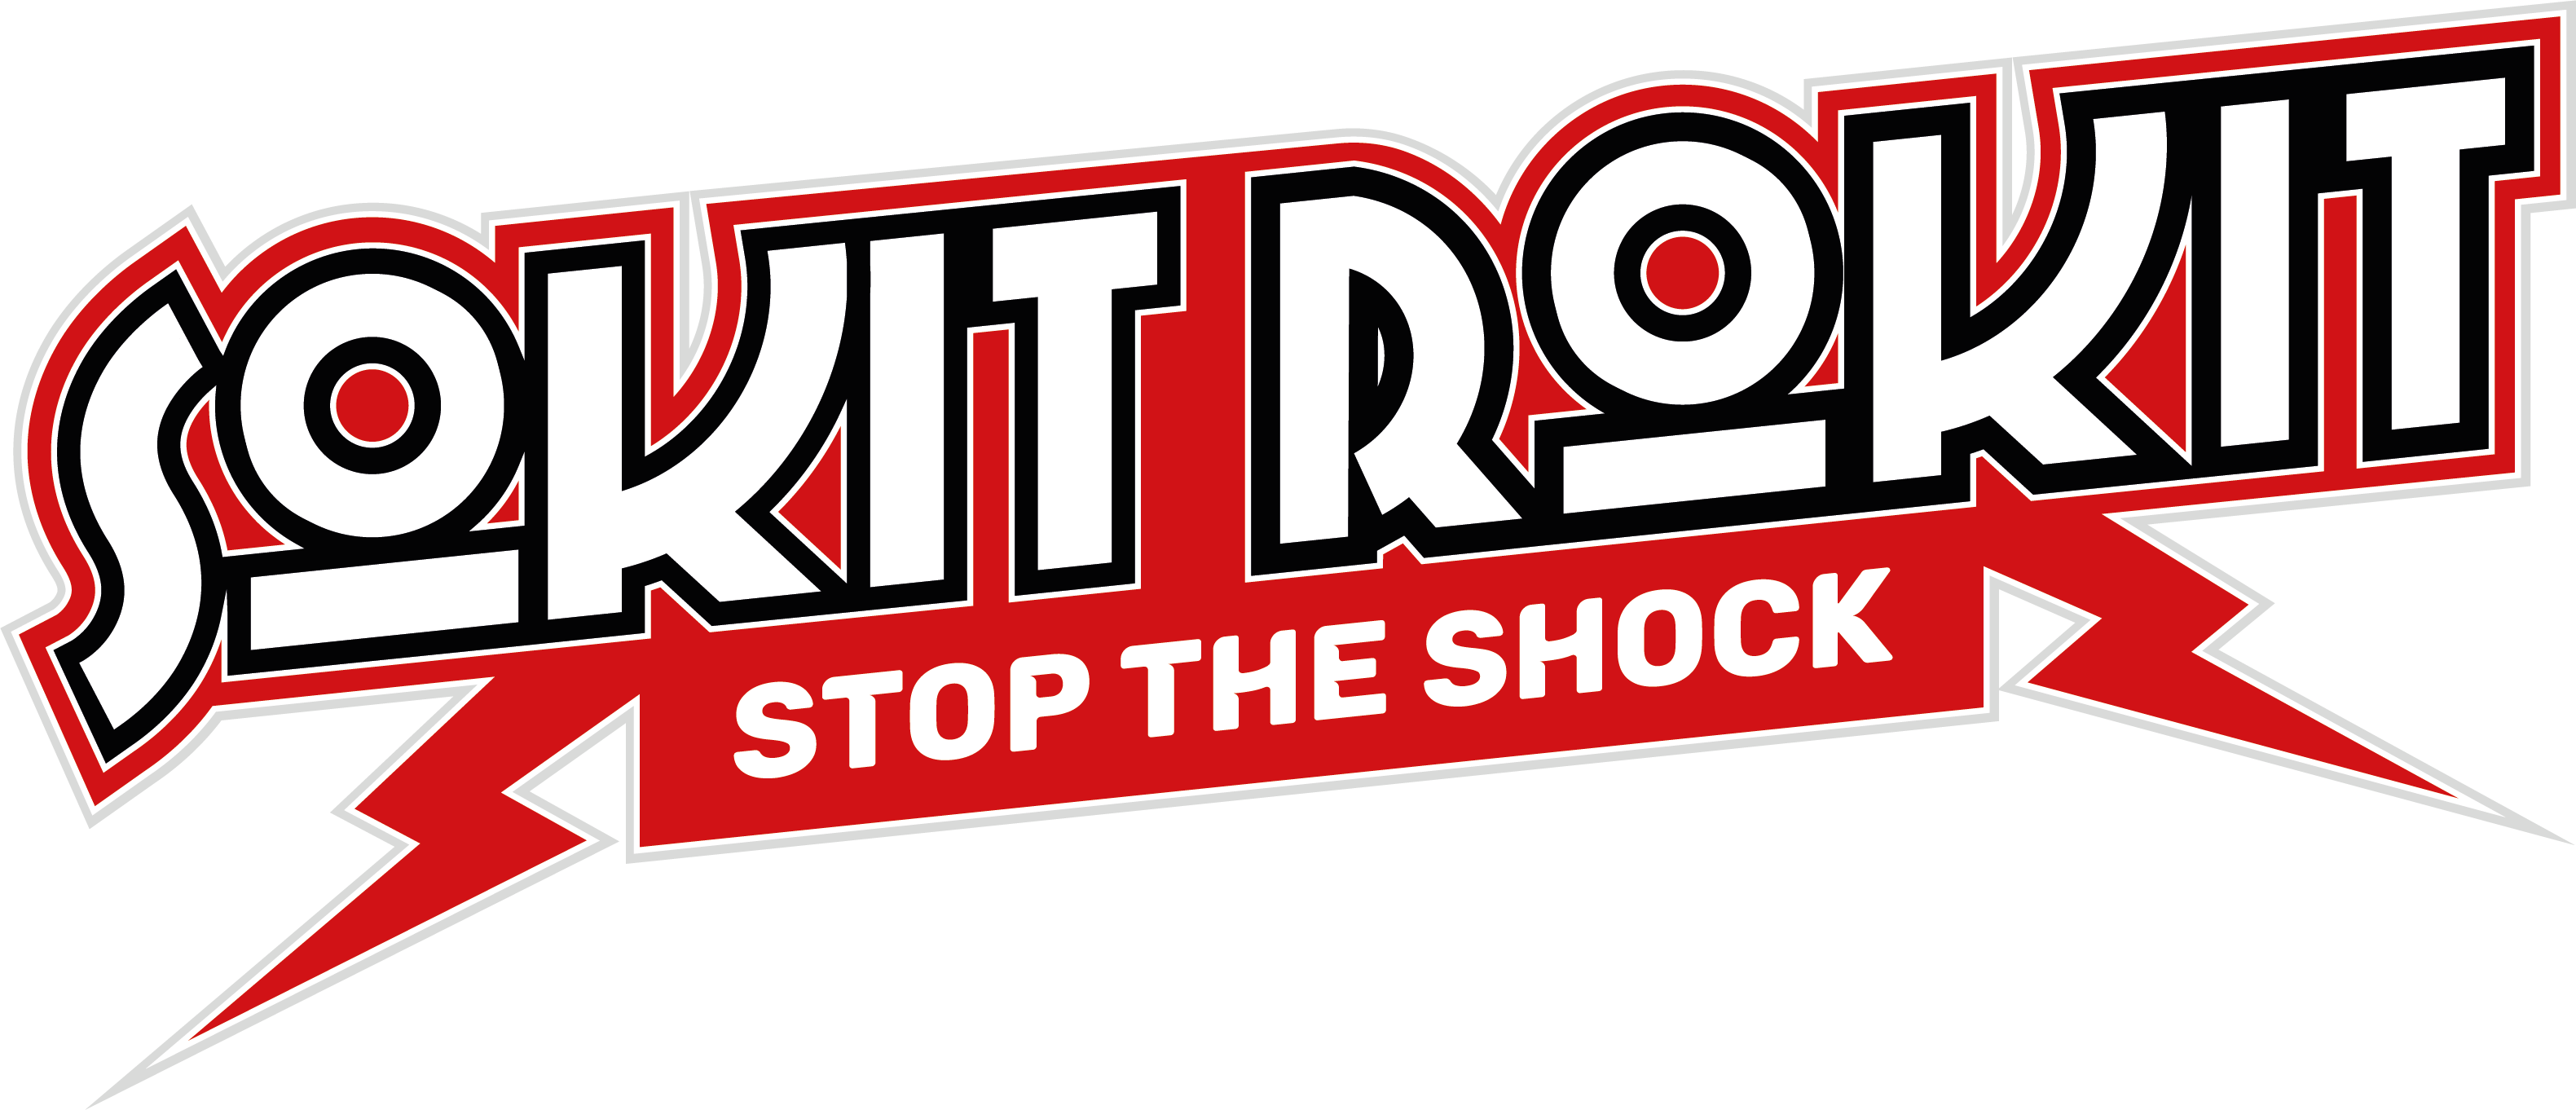 Sokit Rokit - Stop the Shock